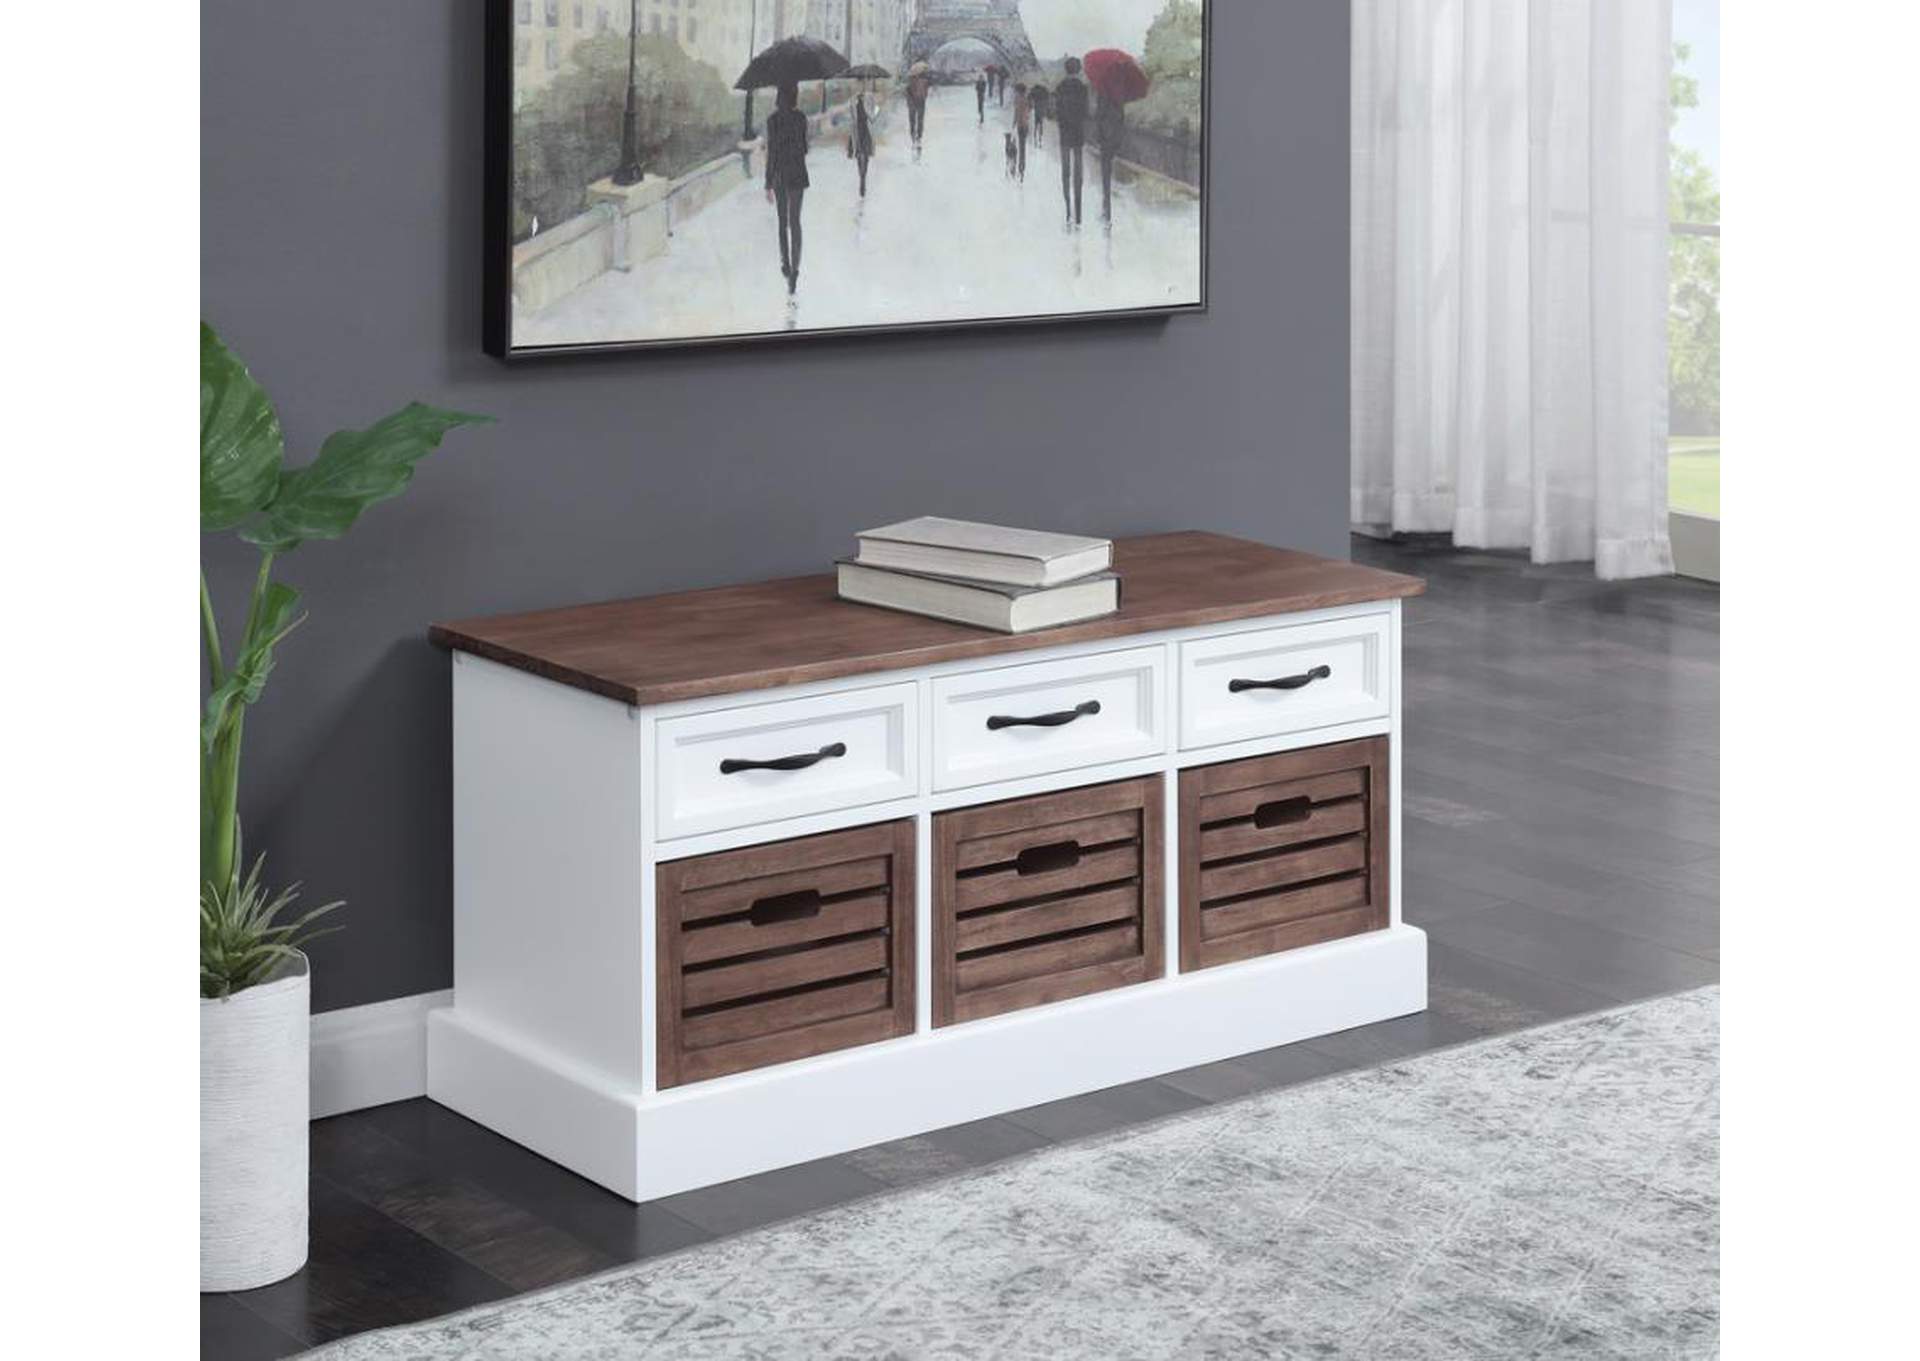 3-drawer Storage Bench Weathered Brown and White,Coaster Furniture